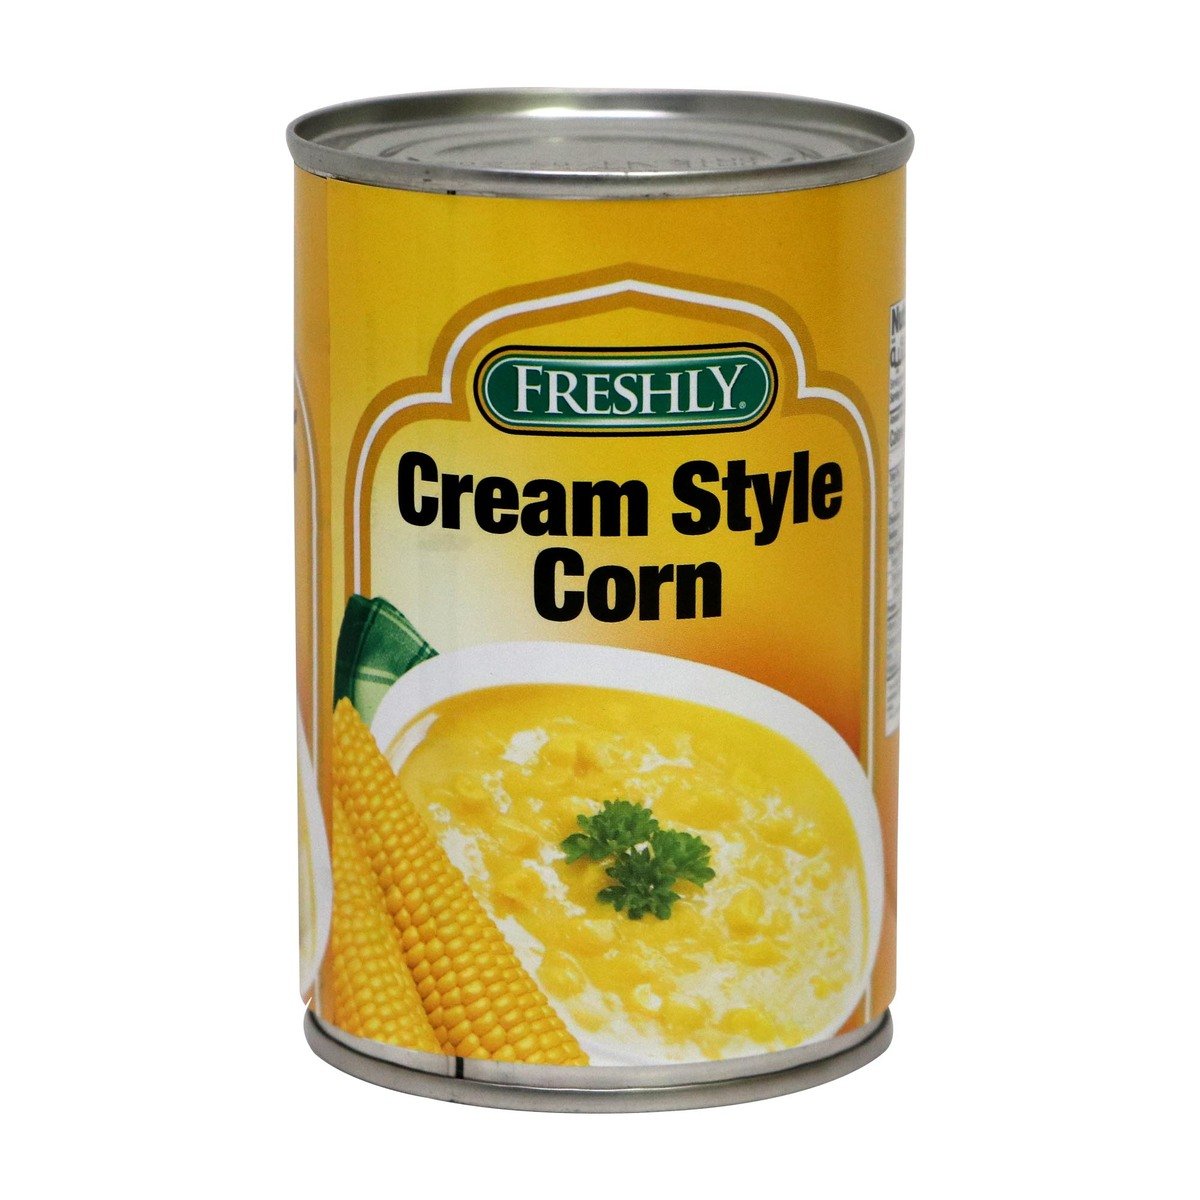 Freshly Cream Style Corn 15oz